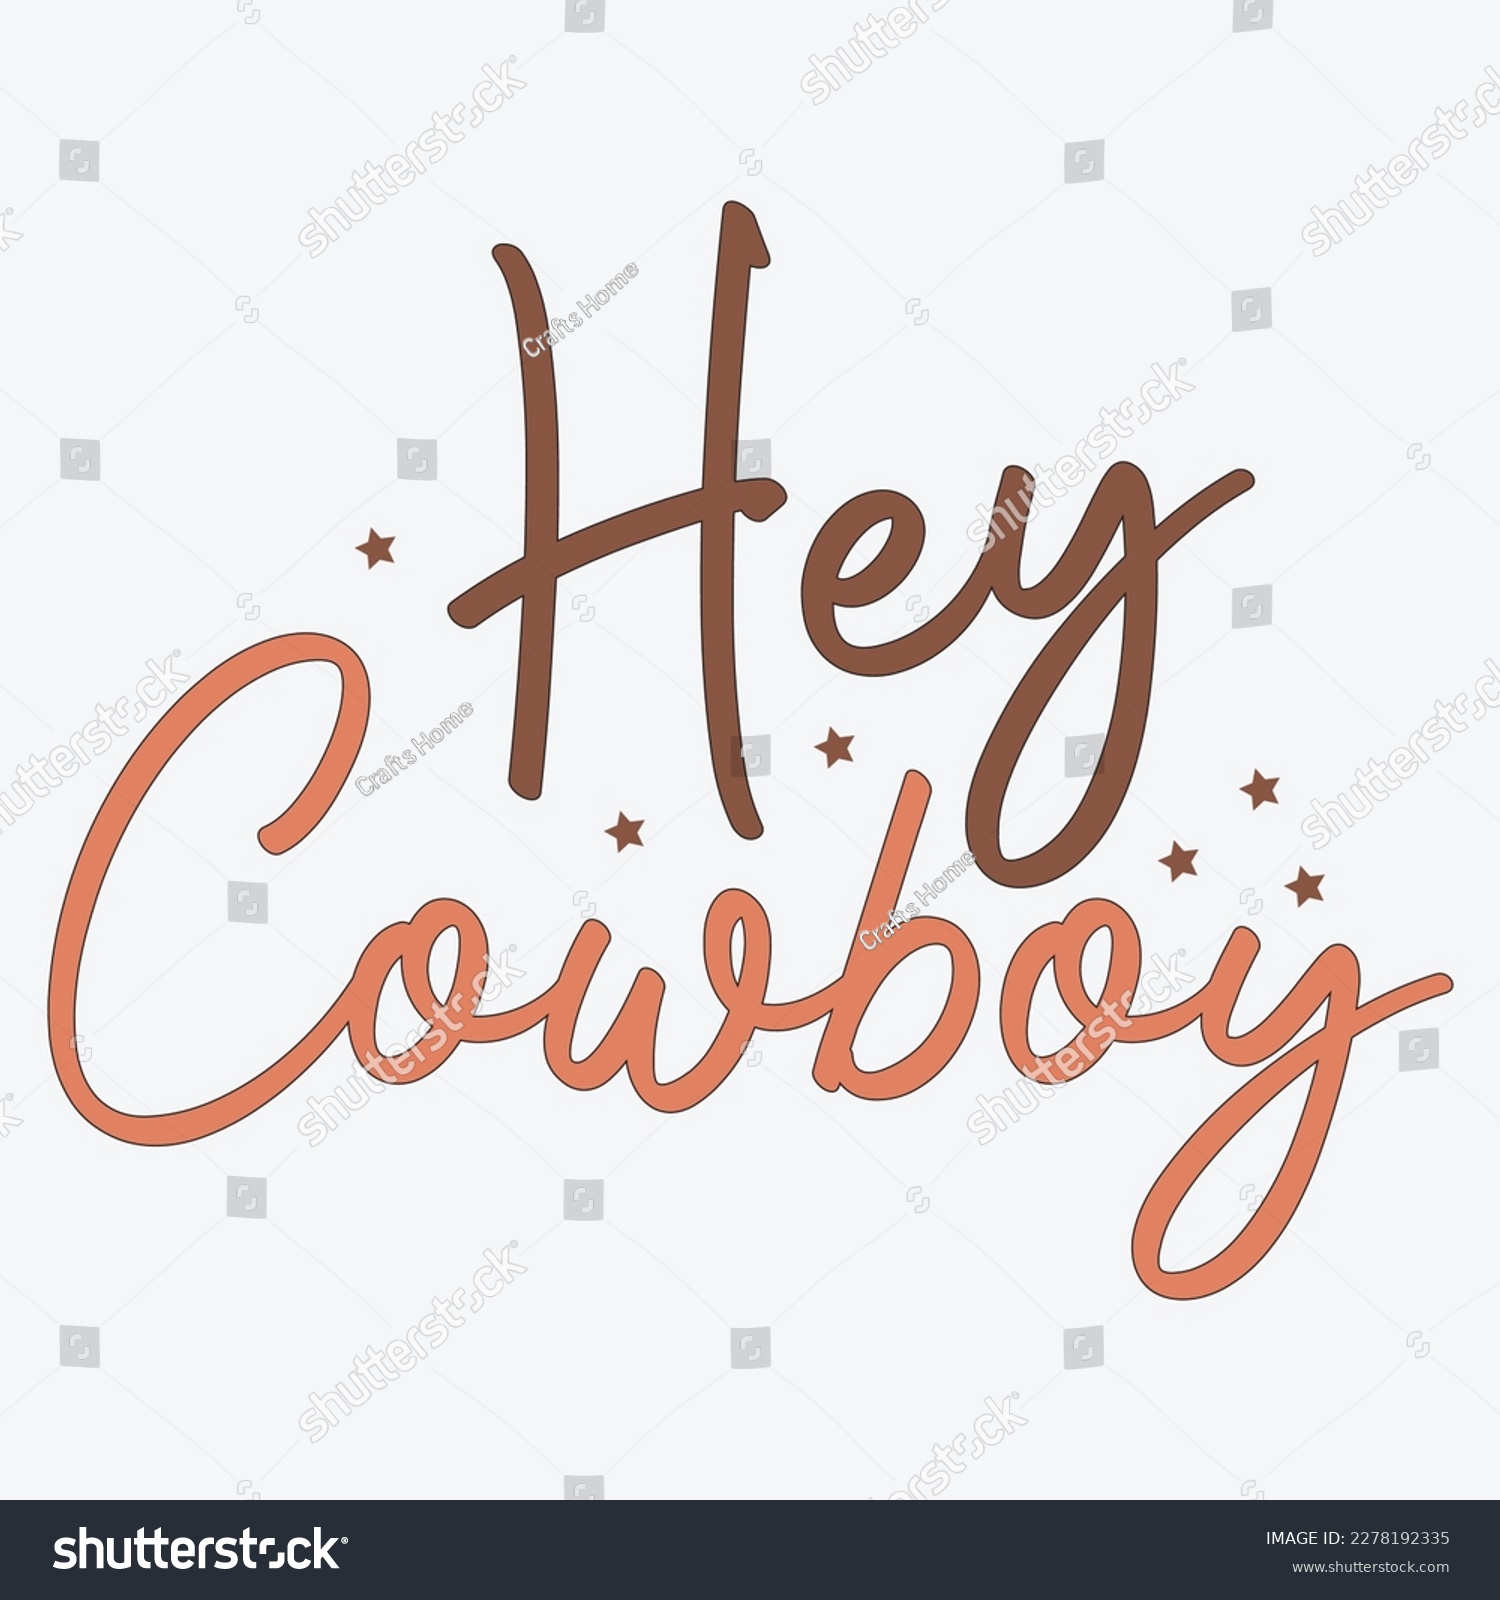 SVG of  Hey Cowboy, cowboy, cowgirl, western, texas, country, cowboy hat, hey, funny, cowboy boots, howdy, svg